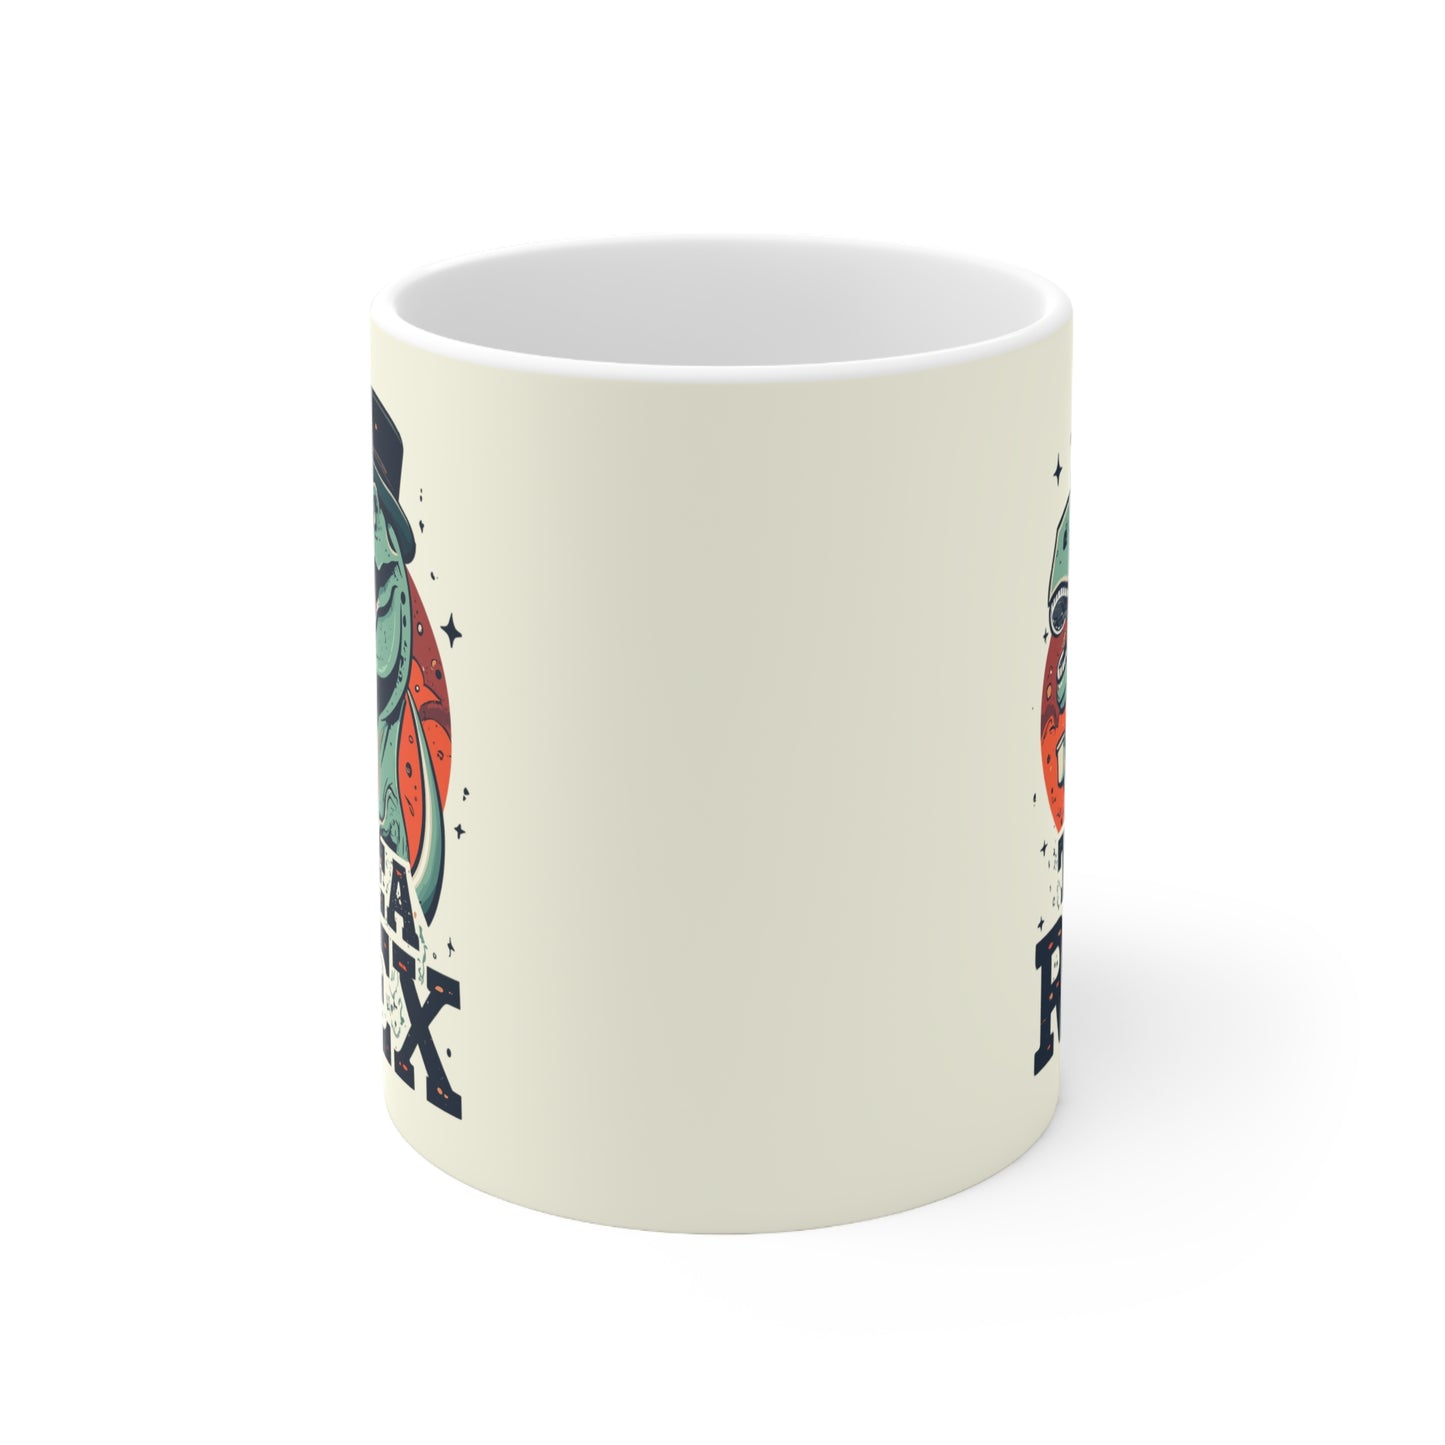 Tea Rex, Ceramic Mug 11oz